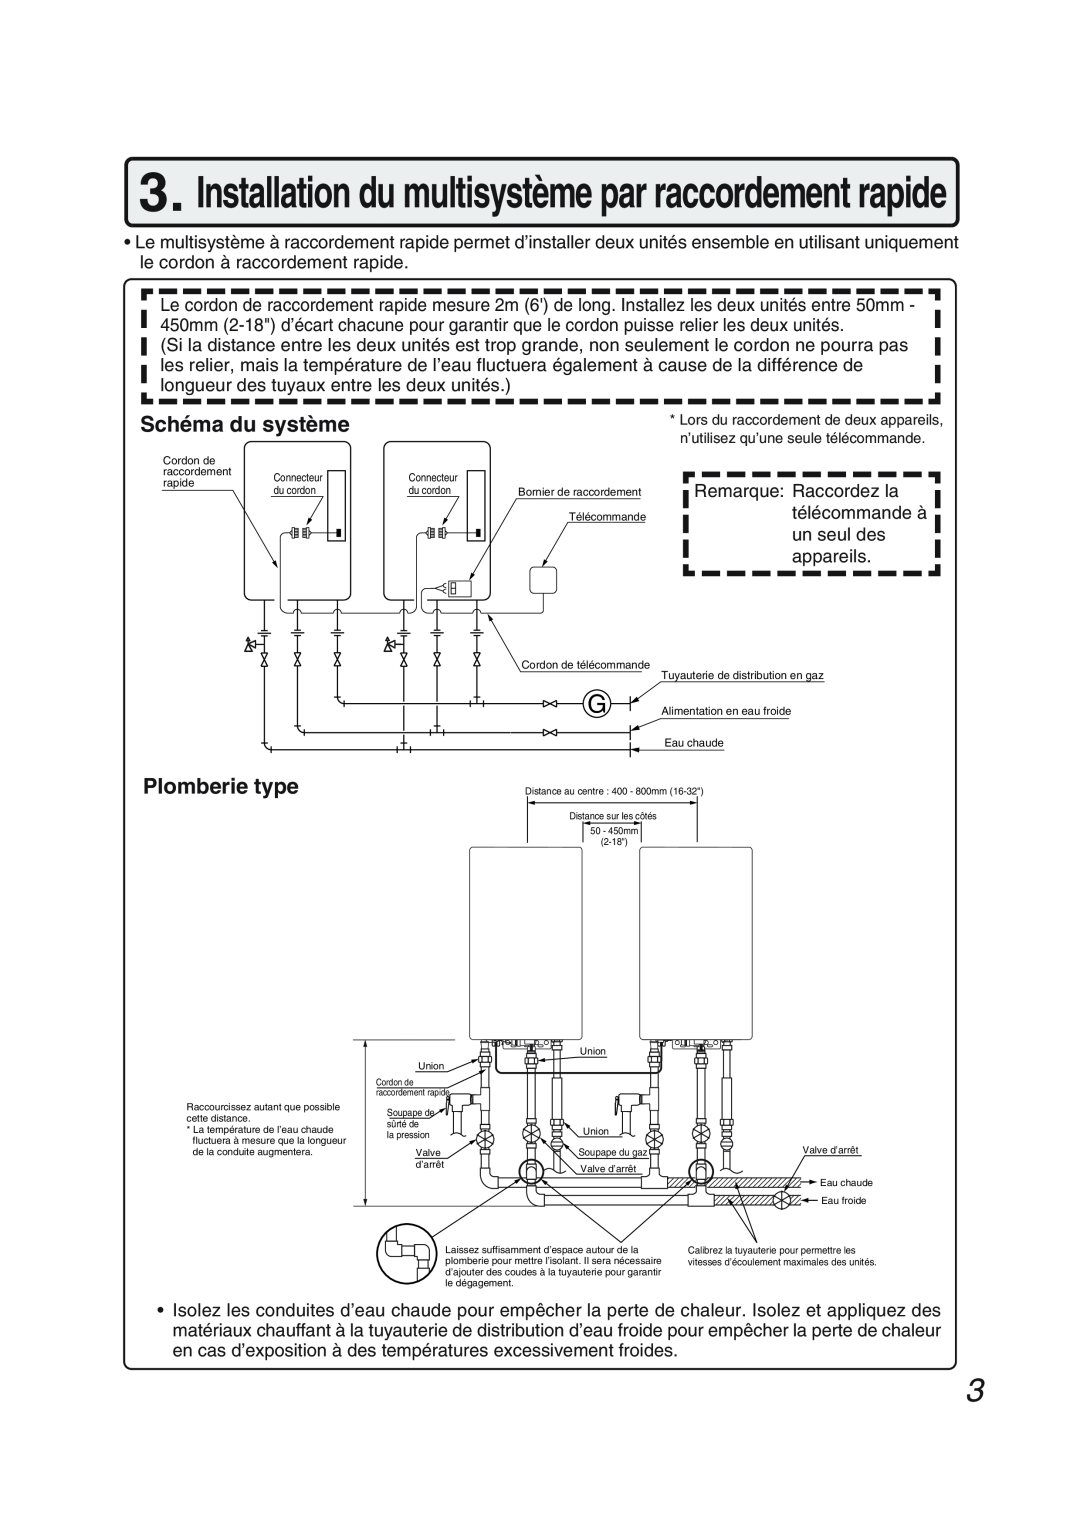 Pentax N-0751M-OD installation manual Schéma du système, Plomberie type 